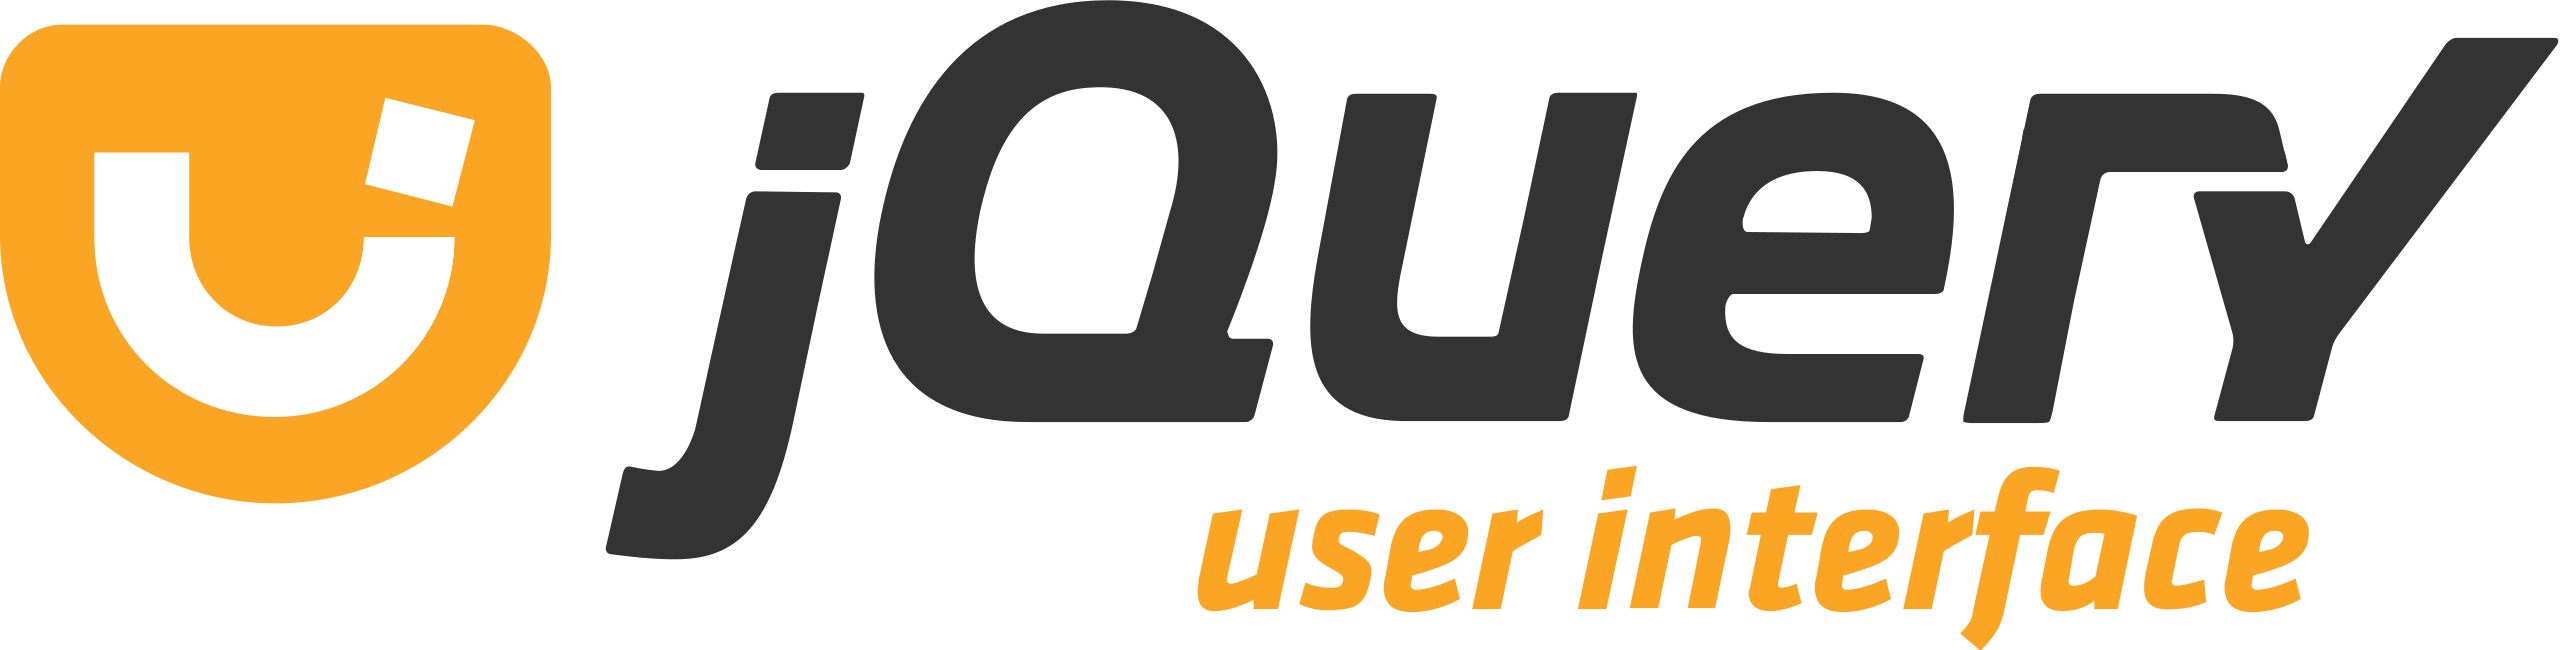 FileJQuery UI Logo.svg   Wikimedia Commons